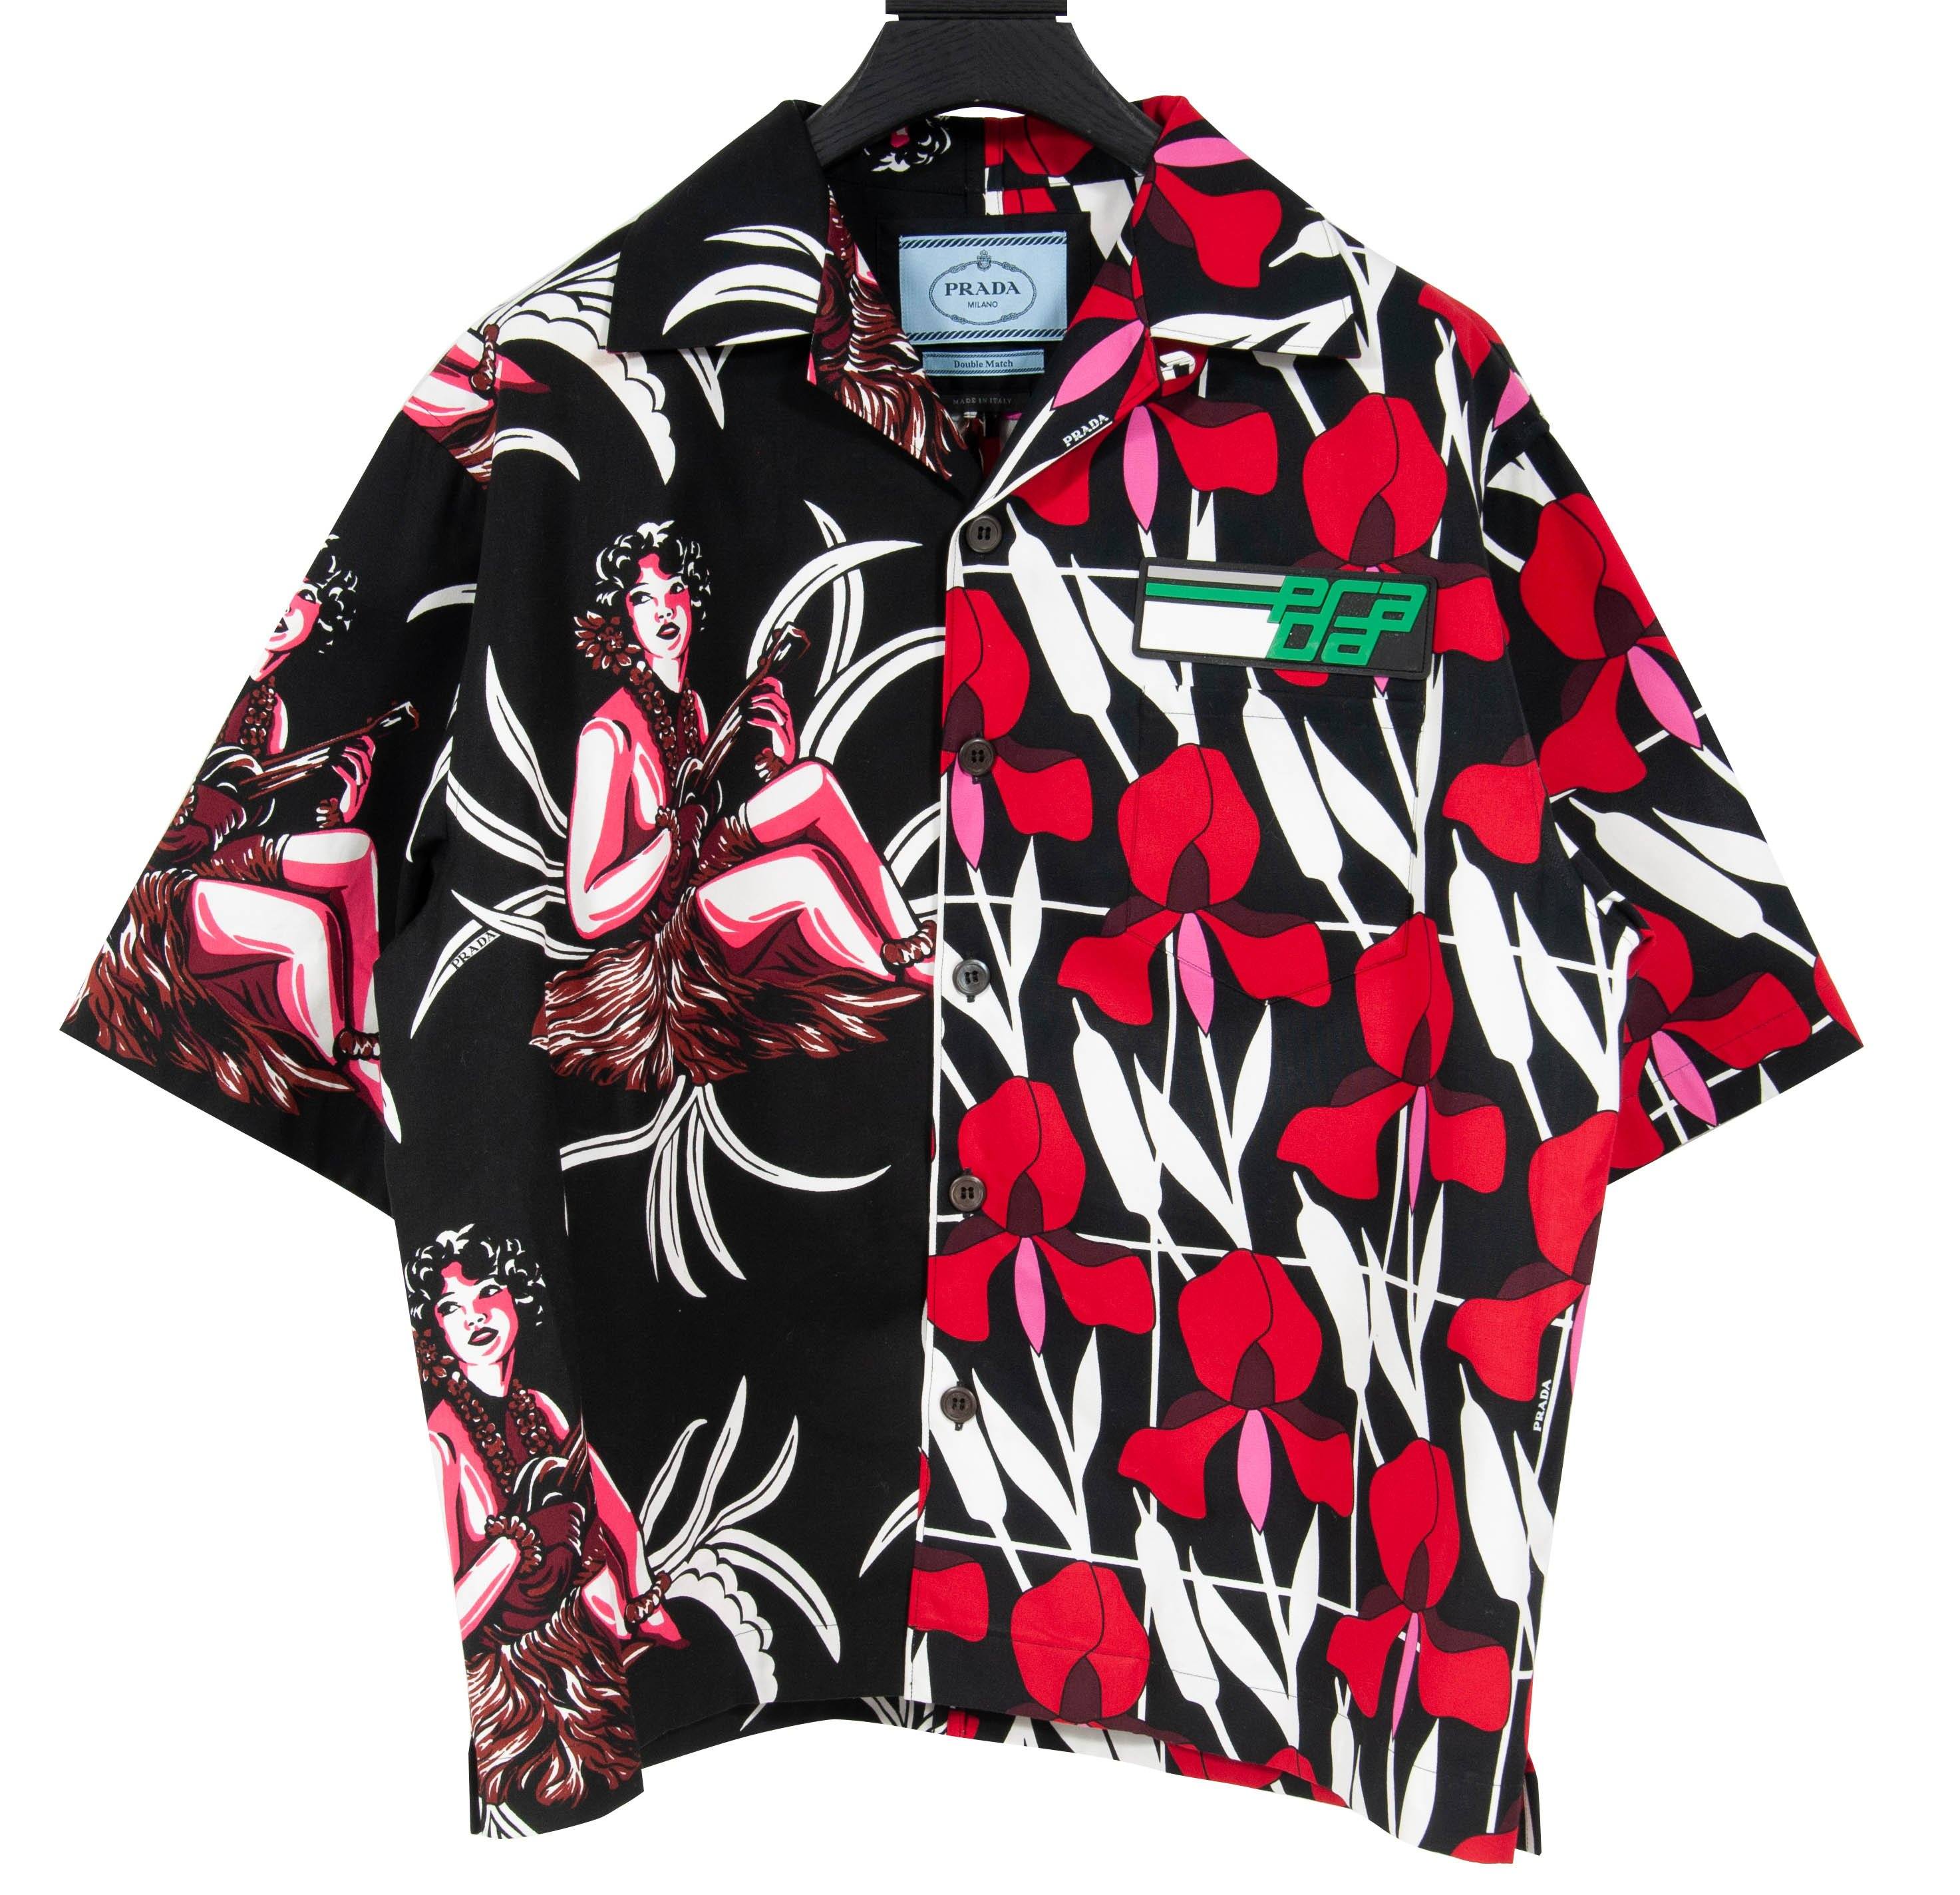 Prada Flames Double Match Bowling Shirt Button Up SS20 2020 SIZE XL RARE